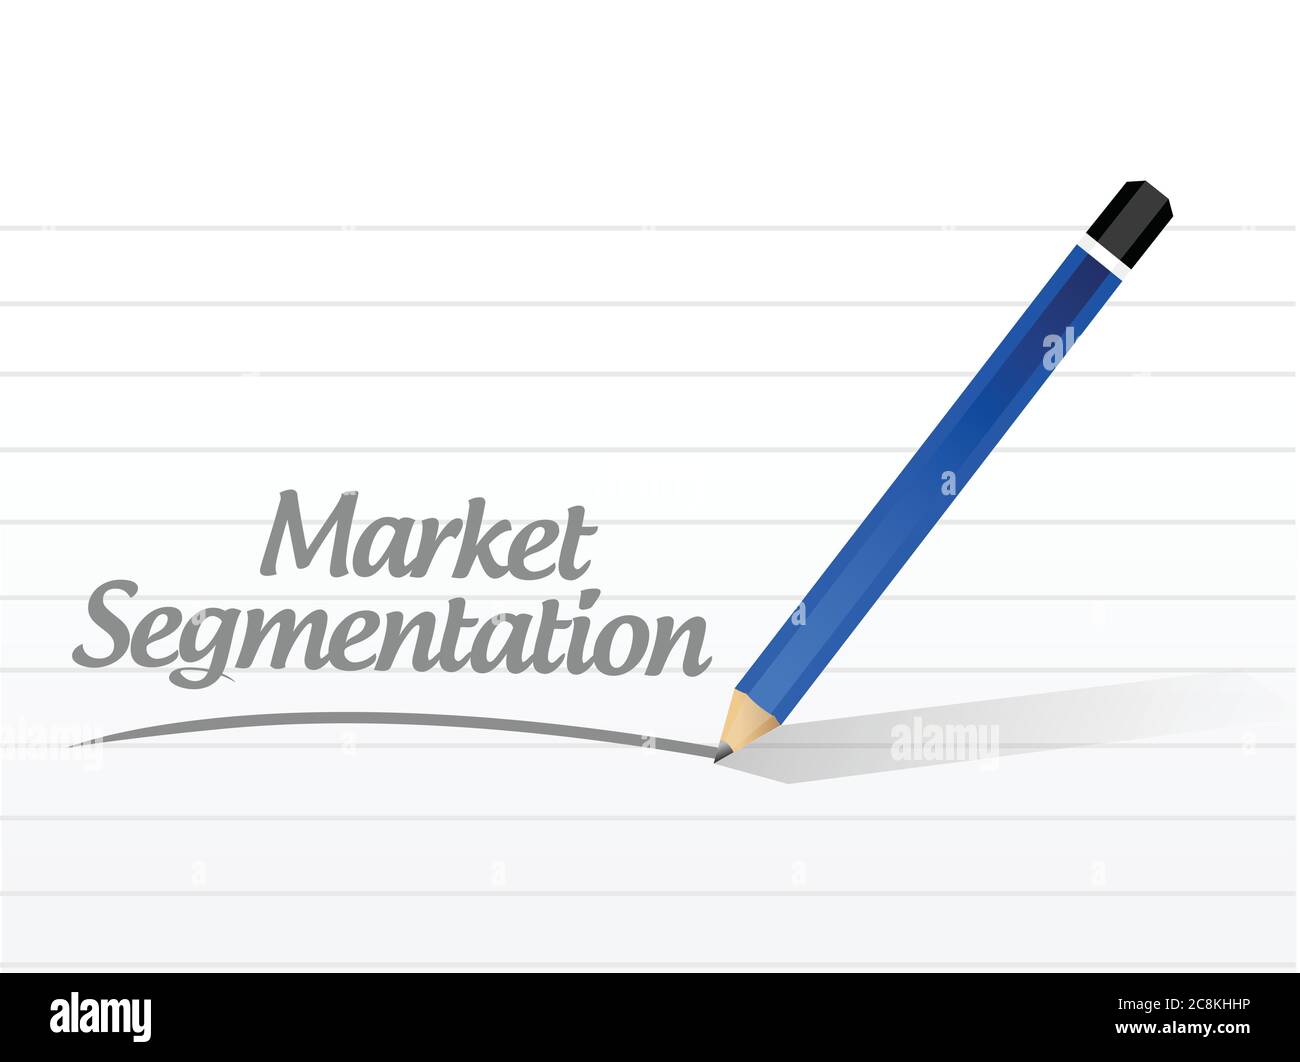 Market segmentation message illustration design over a white background Stock Vector